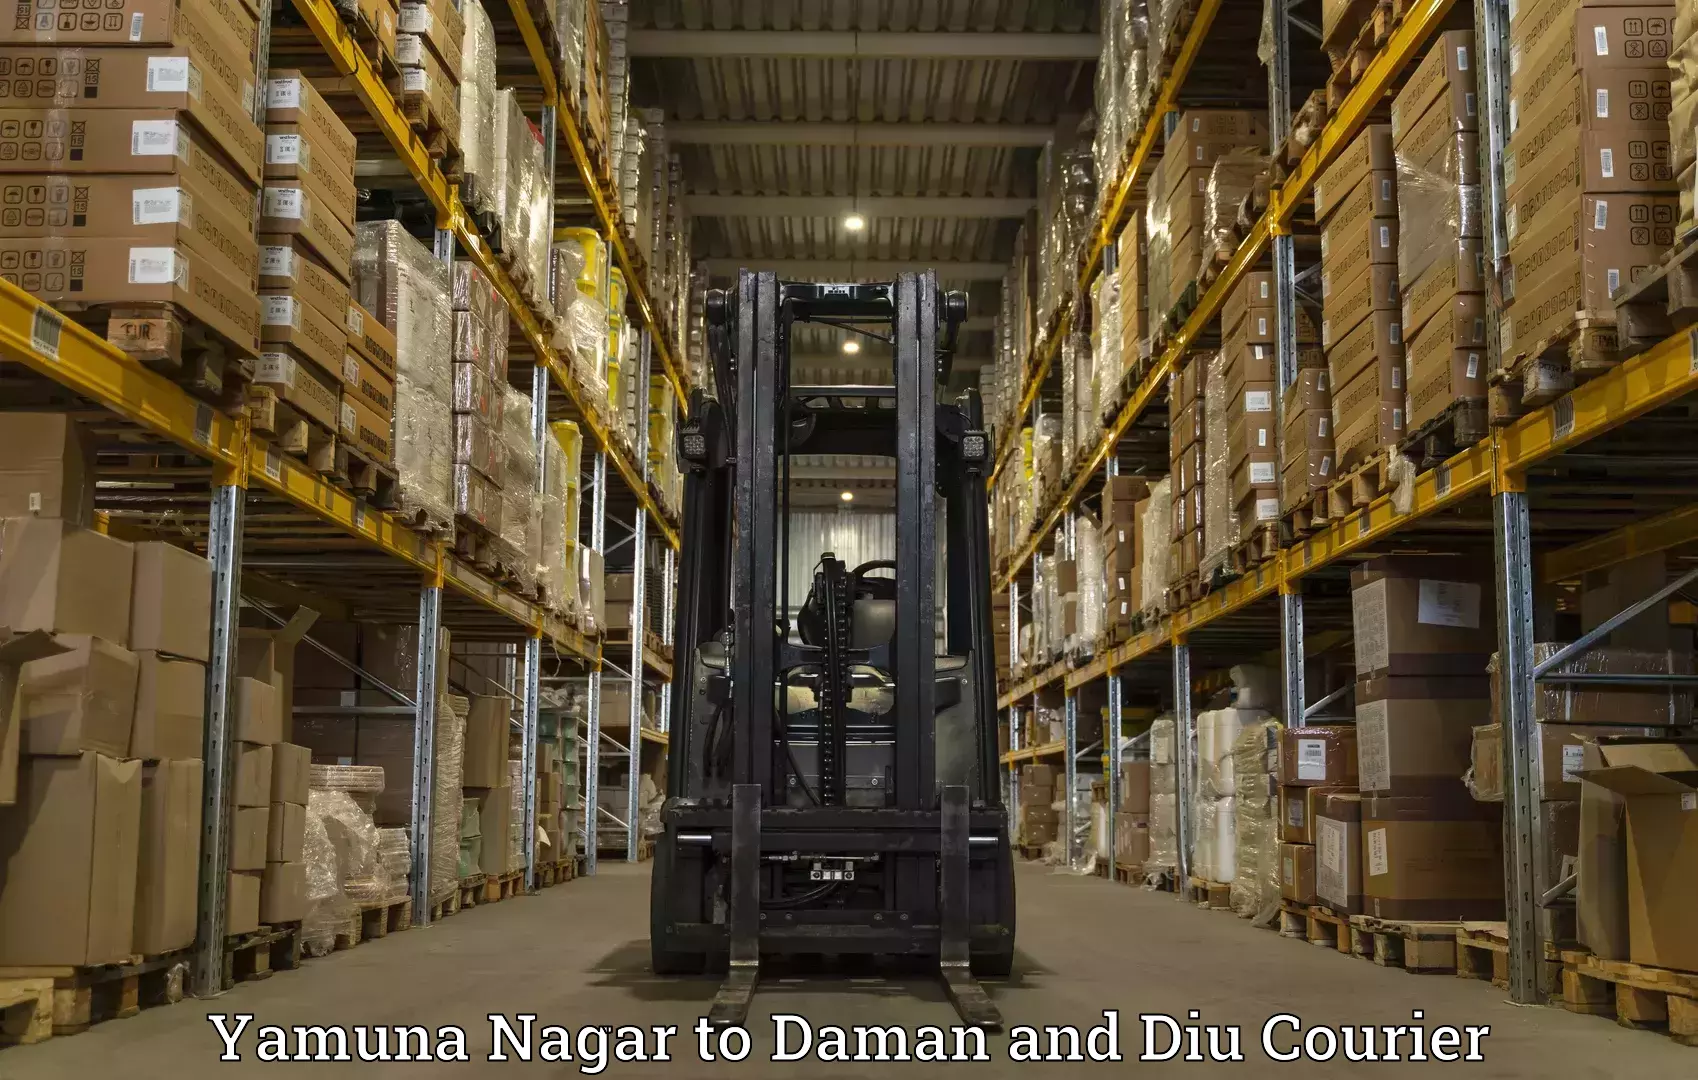 International courier networks Yamuna Nagar to Daman